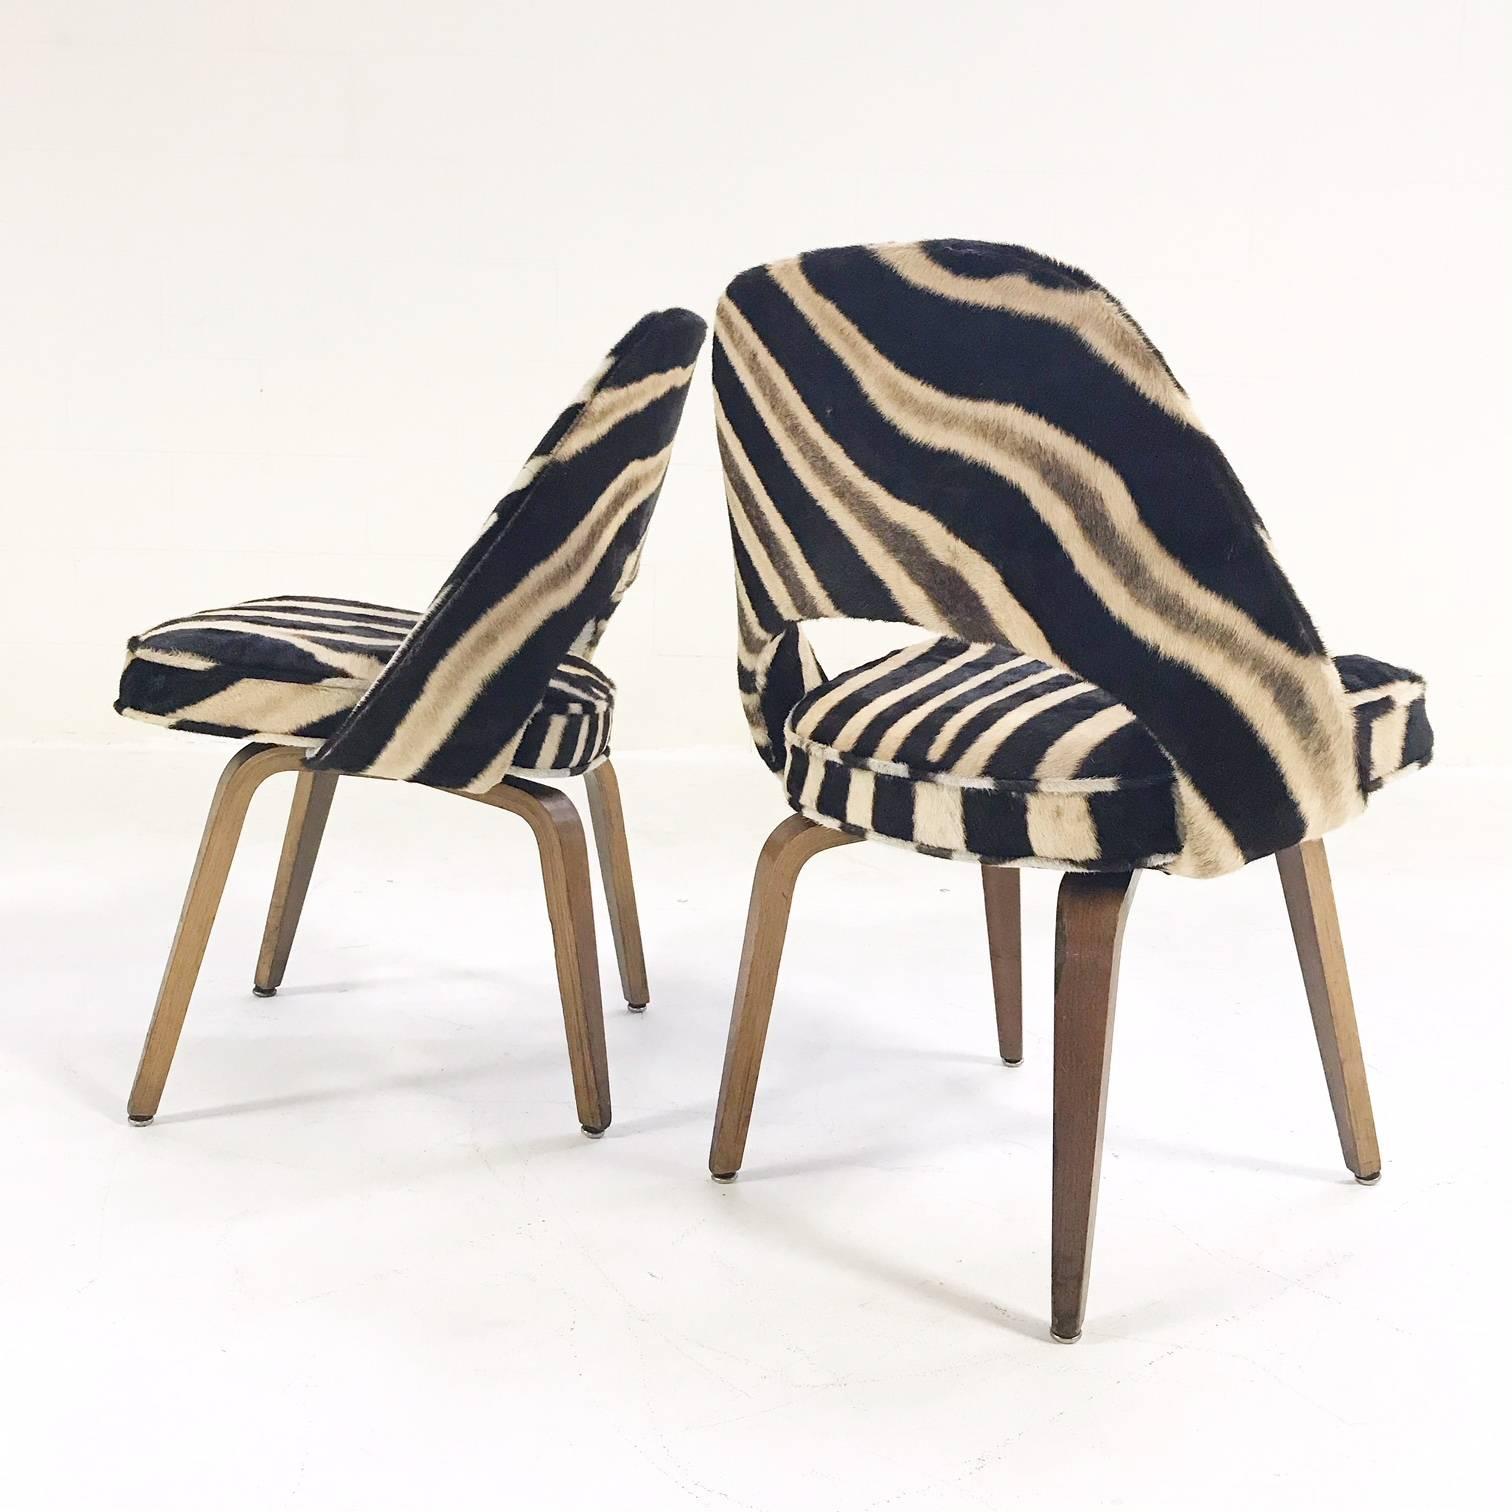 American Vintage Eero Saarinen Executive Chairs for Knoll with Walnut Legs in Zebra Hide